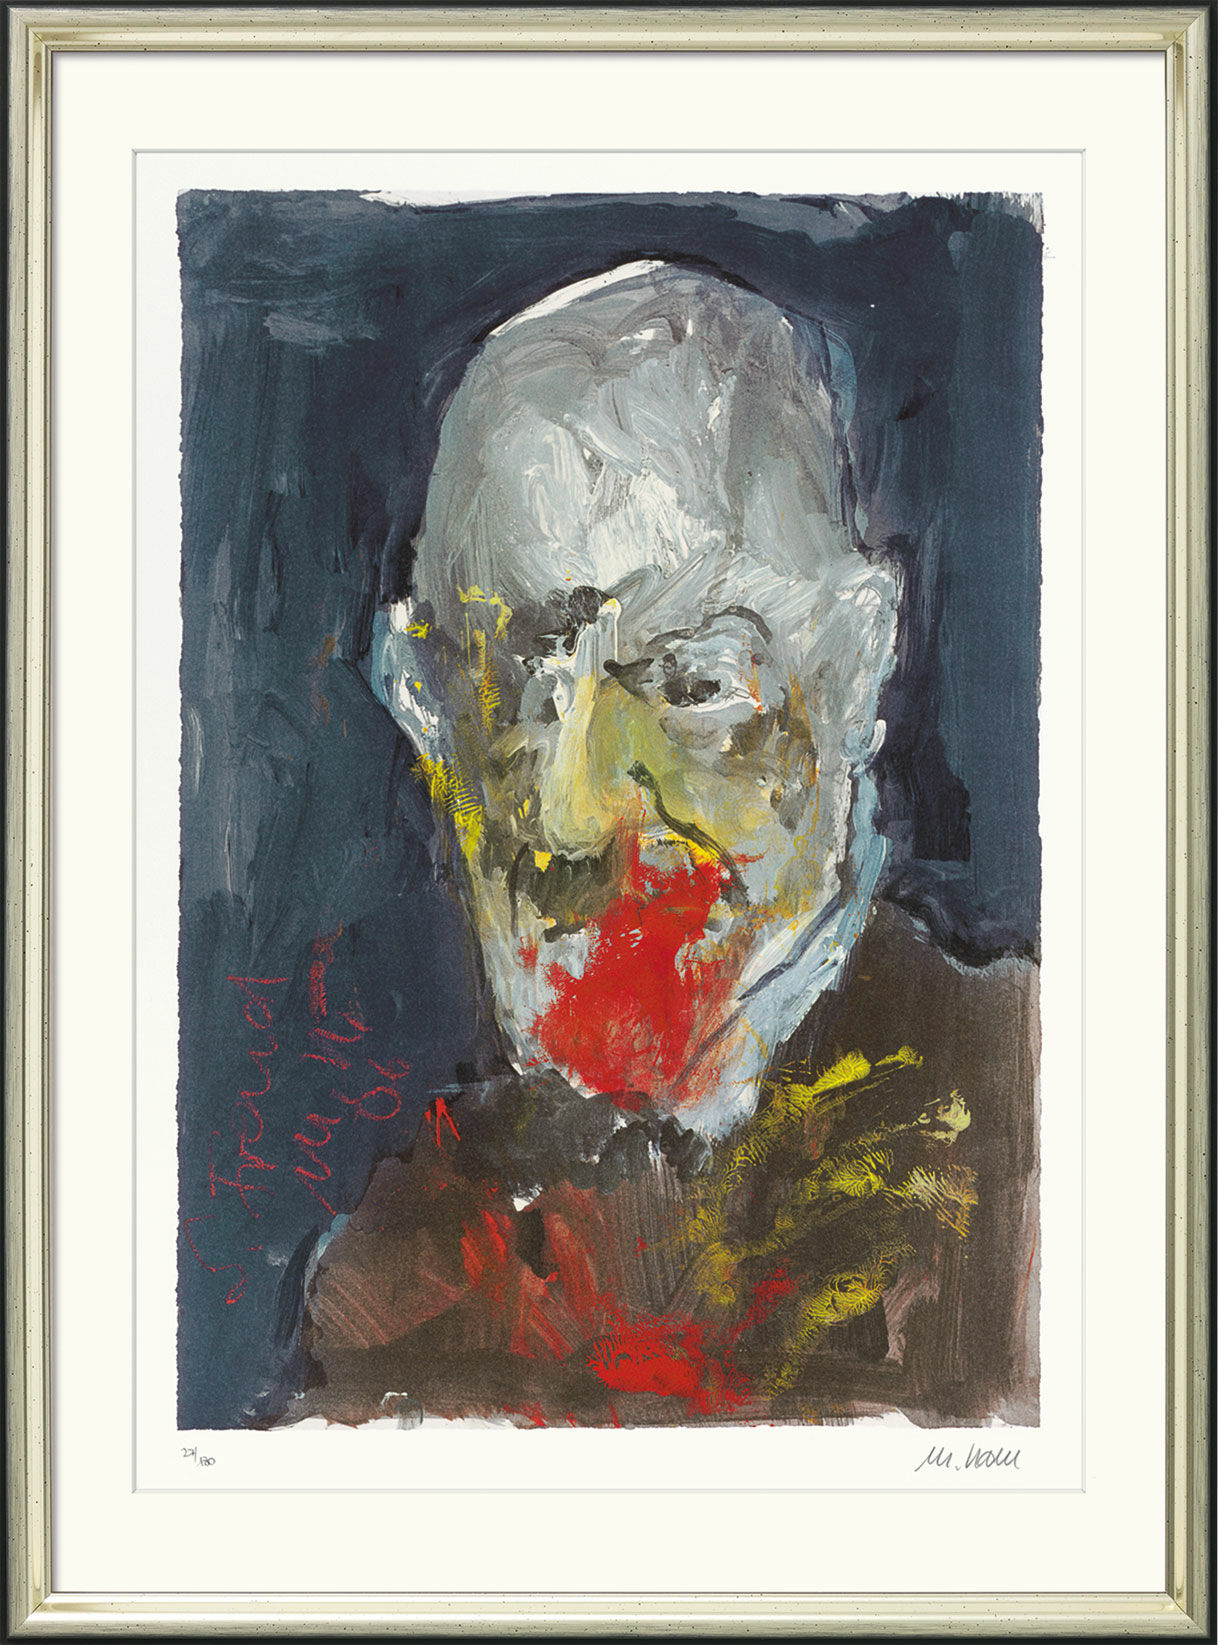 Picture "Sigmund Freud" (2006), framed by Armin Mueller-Stahl